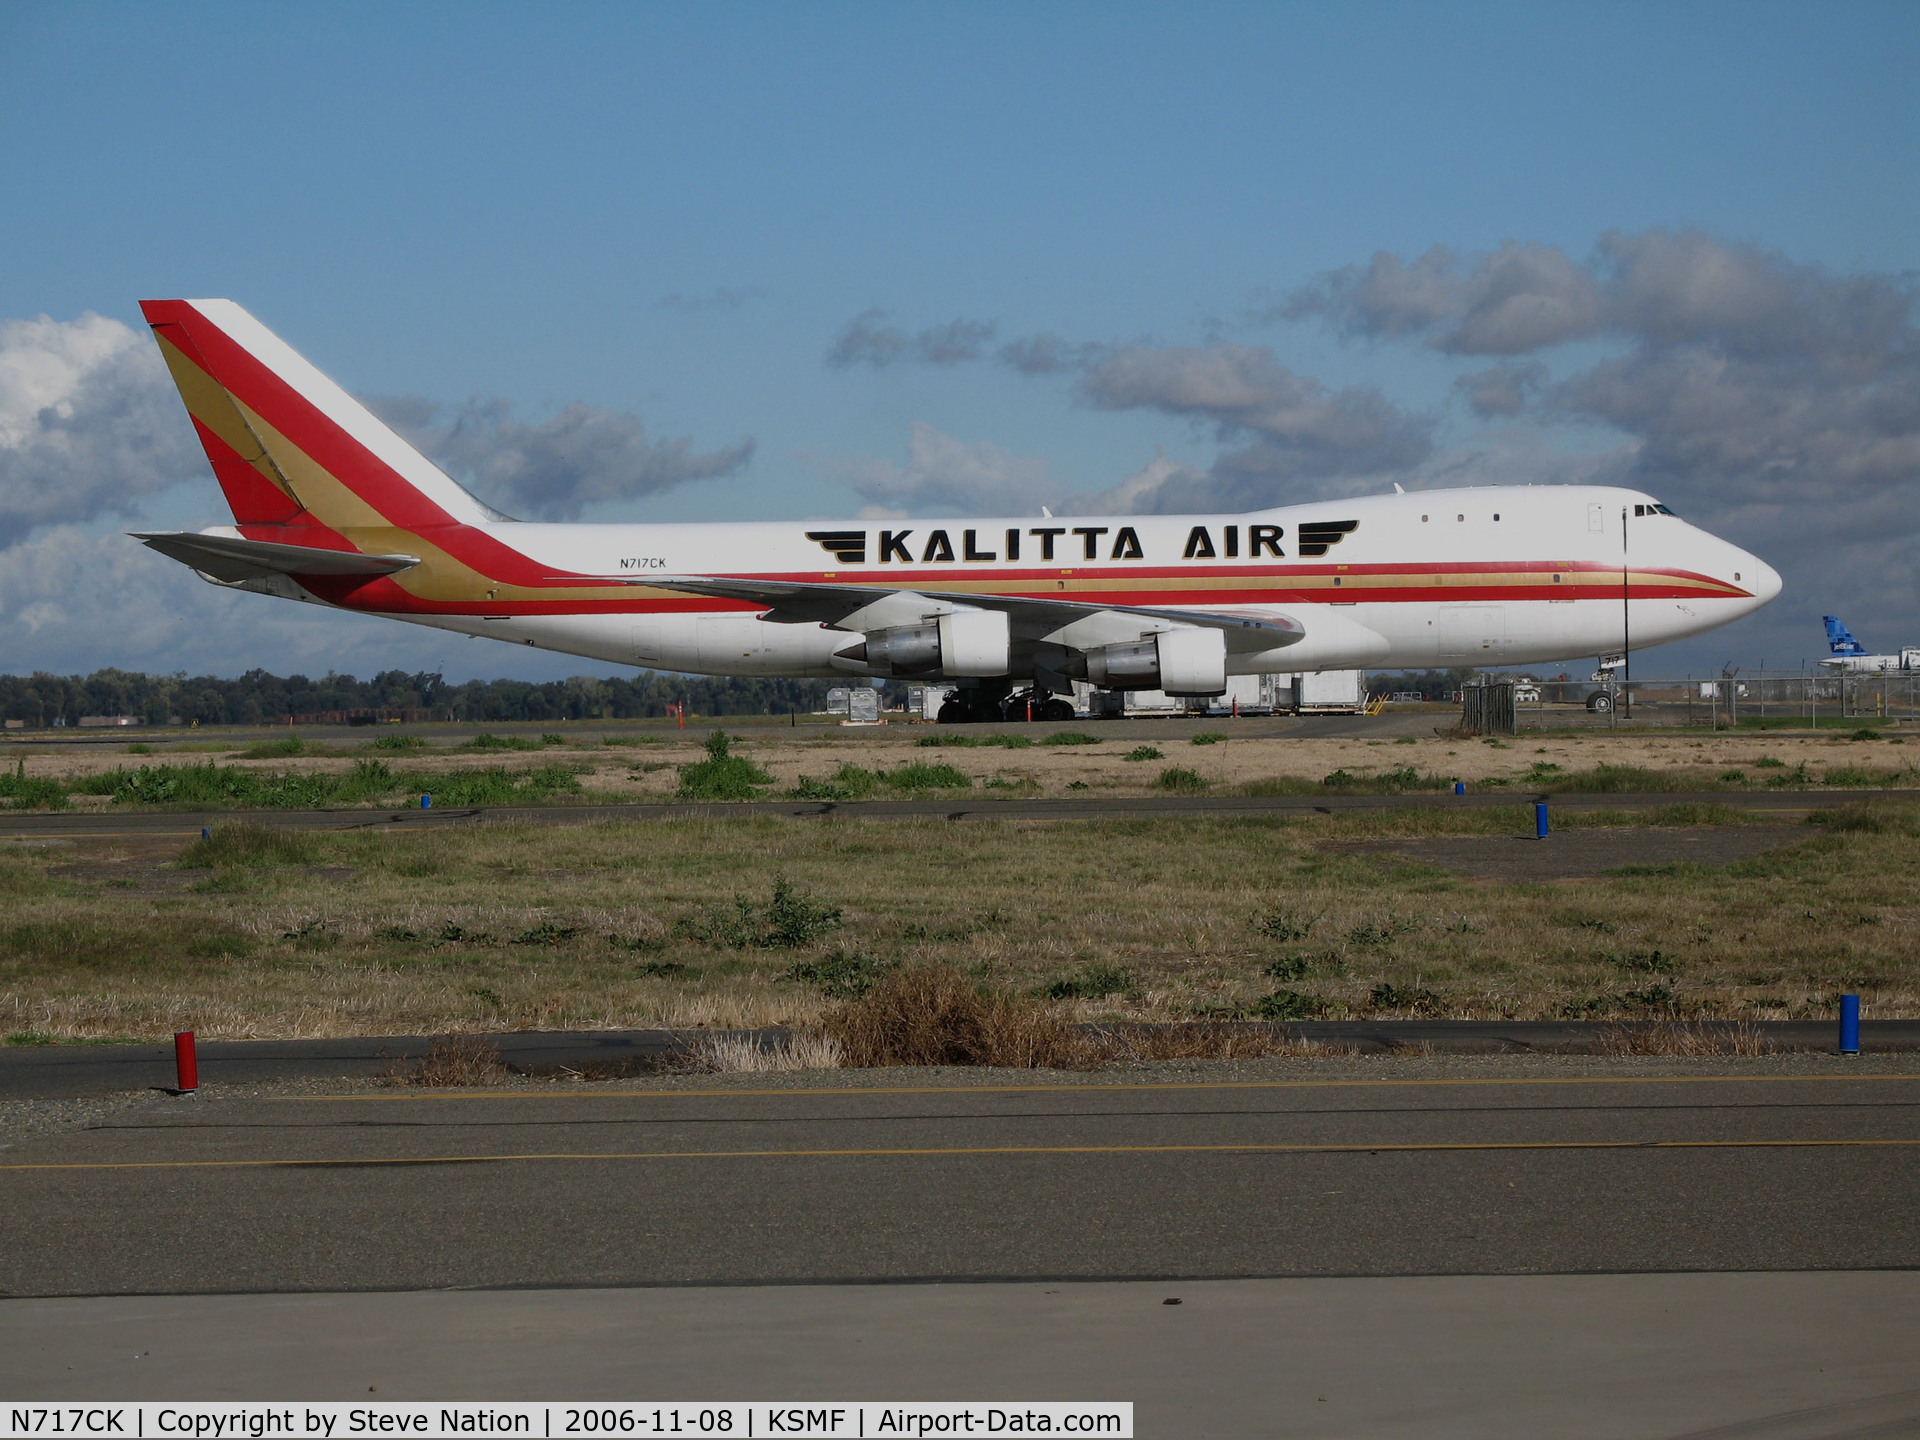 N717CK, 1971 Boeing 747-123 C/N 20325, KALITTA AIR, Ypsilanti, MI 1971 Boeing 747-123 freighter @ Sacramento International Airport, CA (de-registered 2012-07-18)